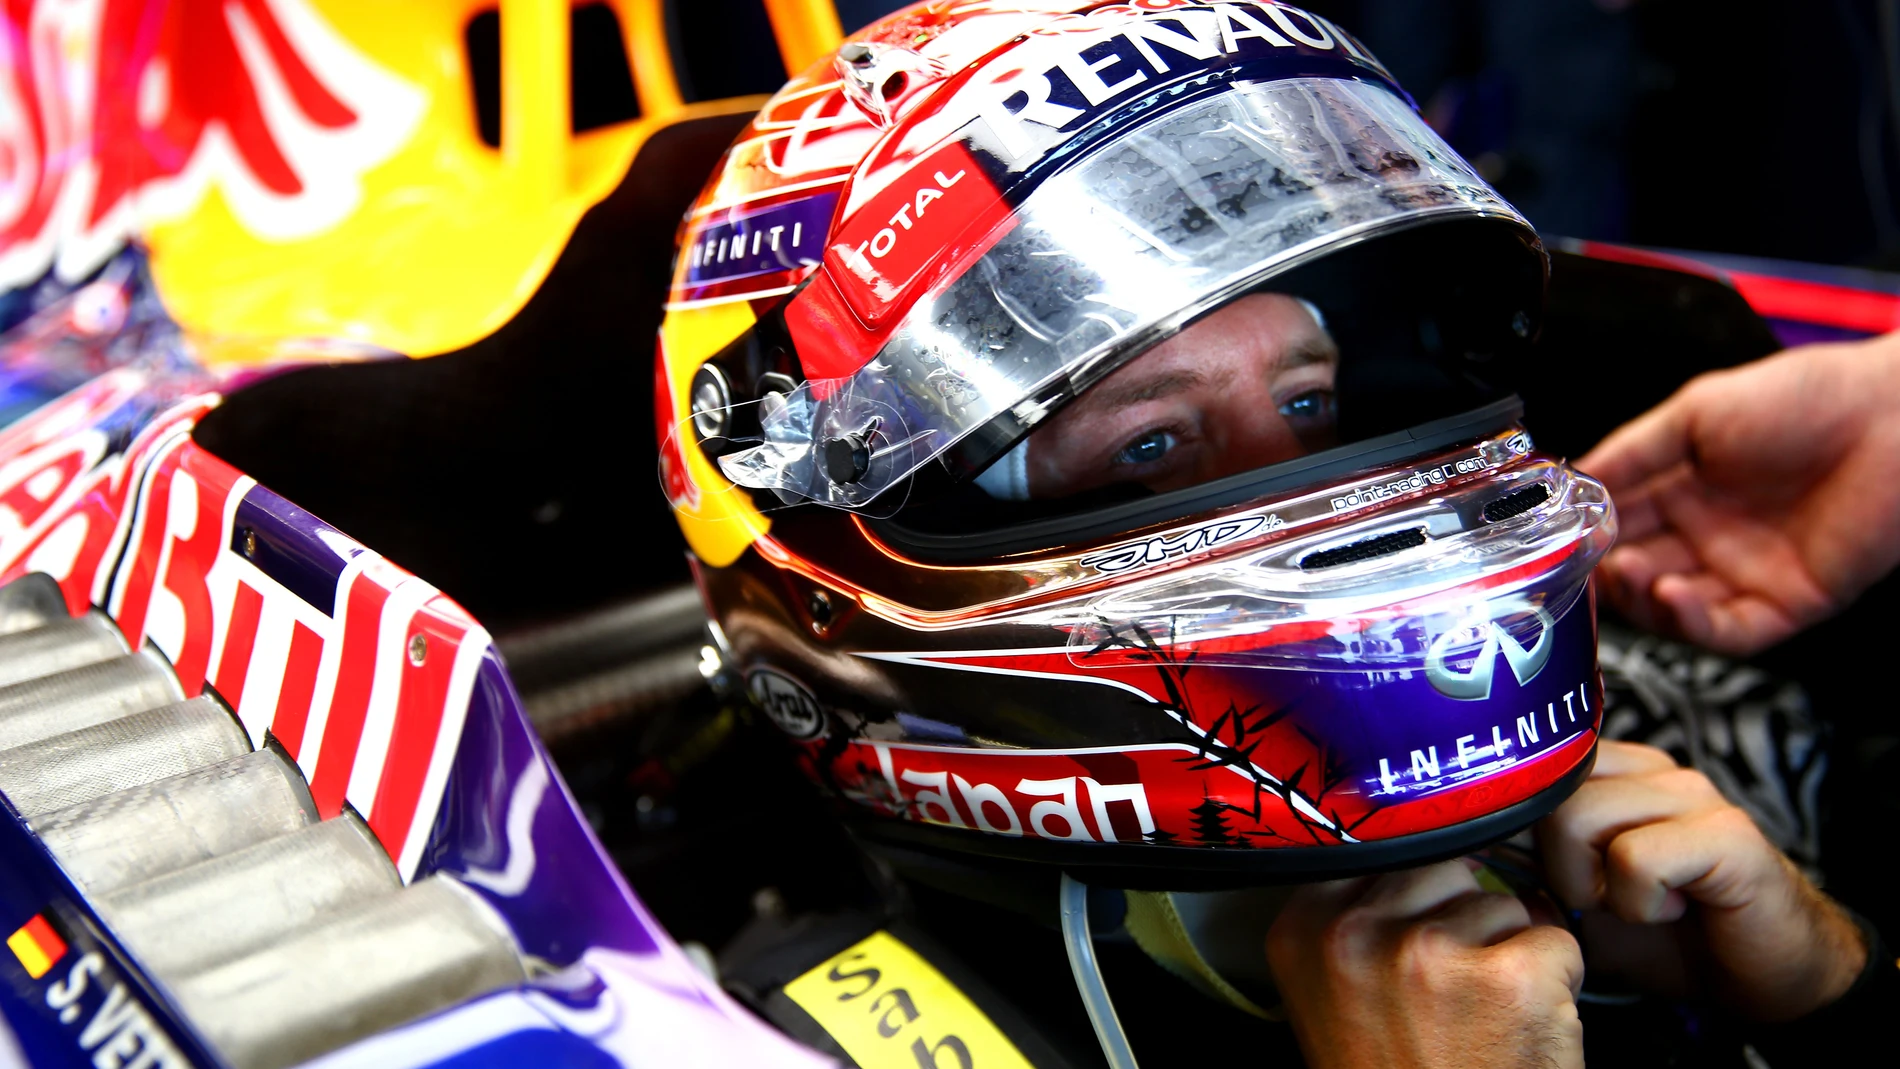 Vettel se coloca el casco